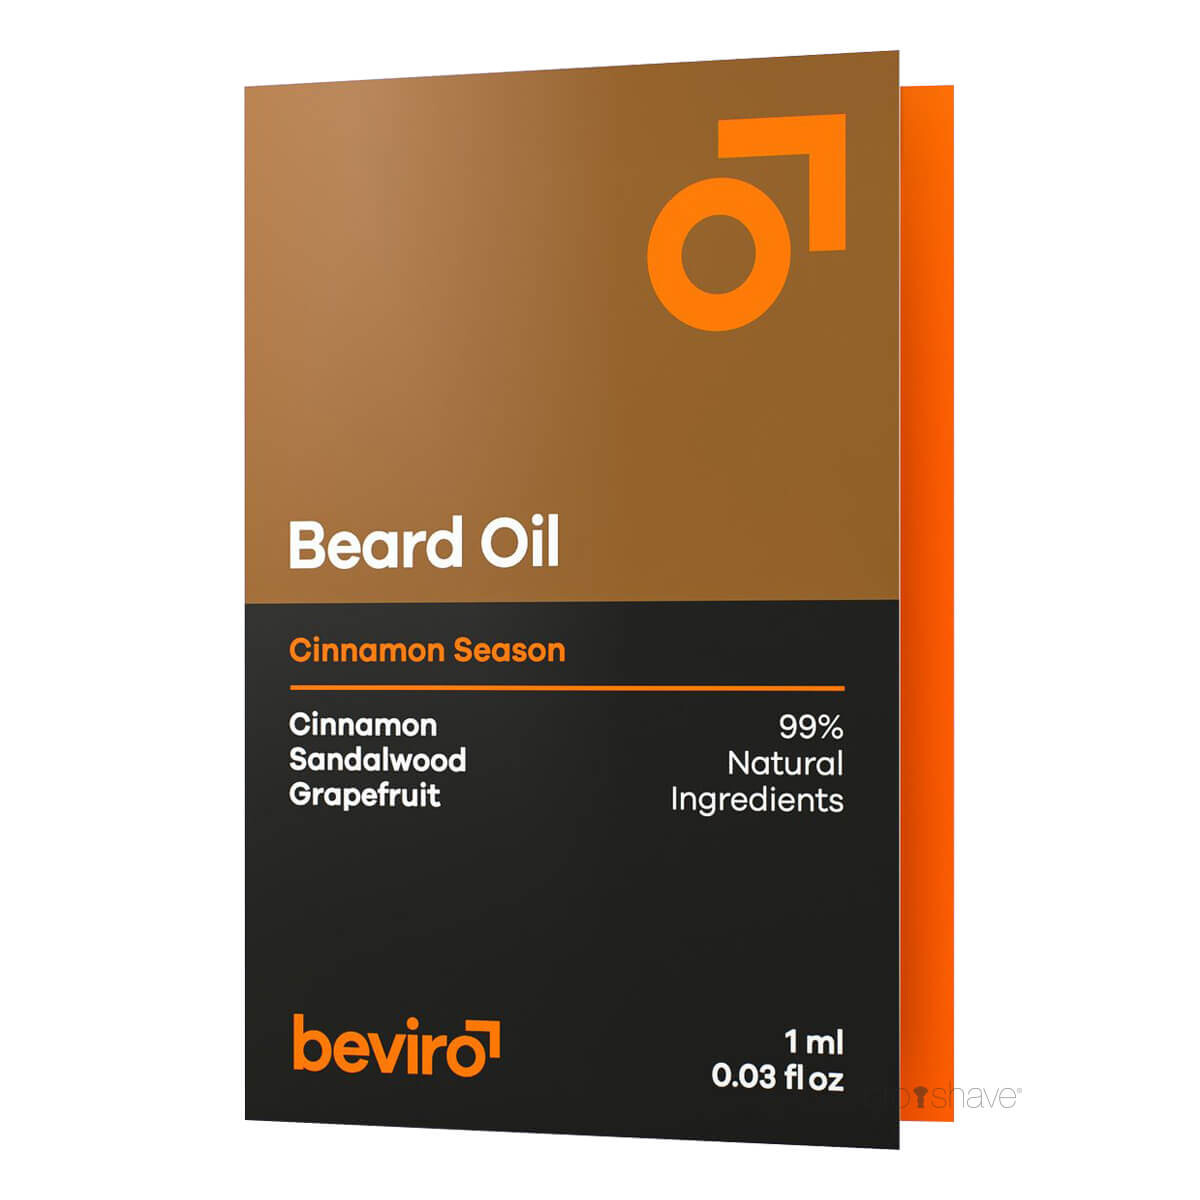 Se Beviro Beard Oil, Cinnamon Season, Sample, 1 ml. hos Proshave